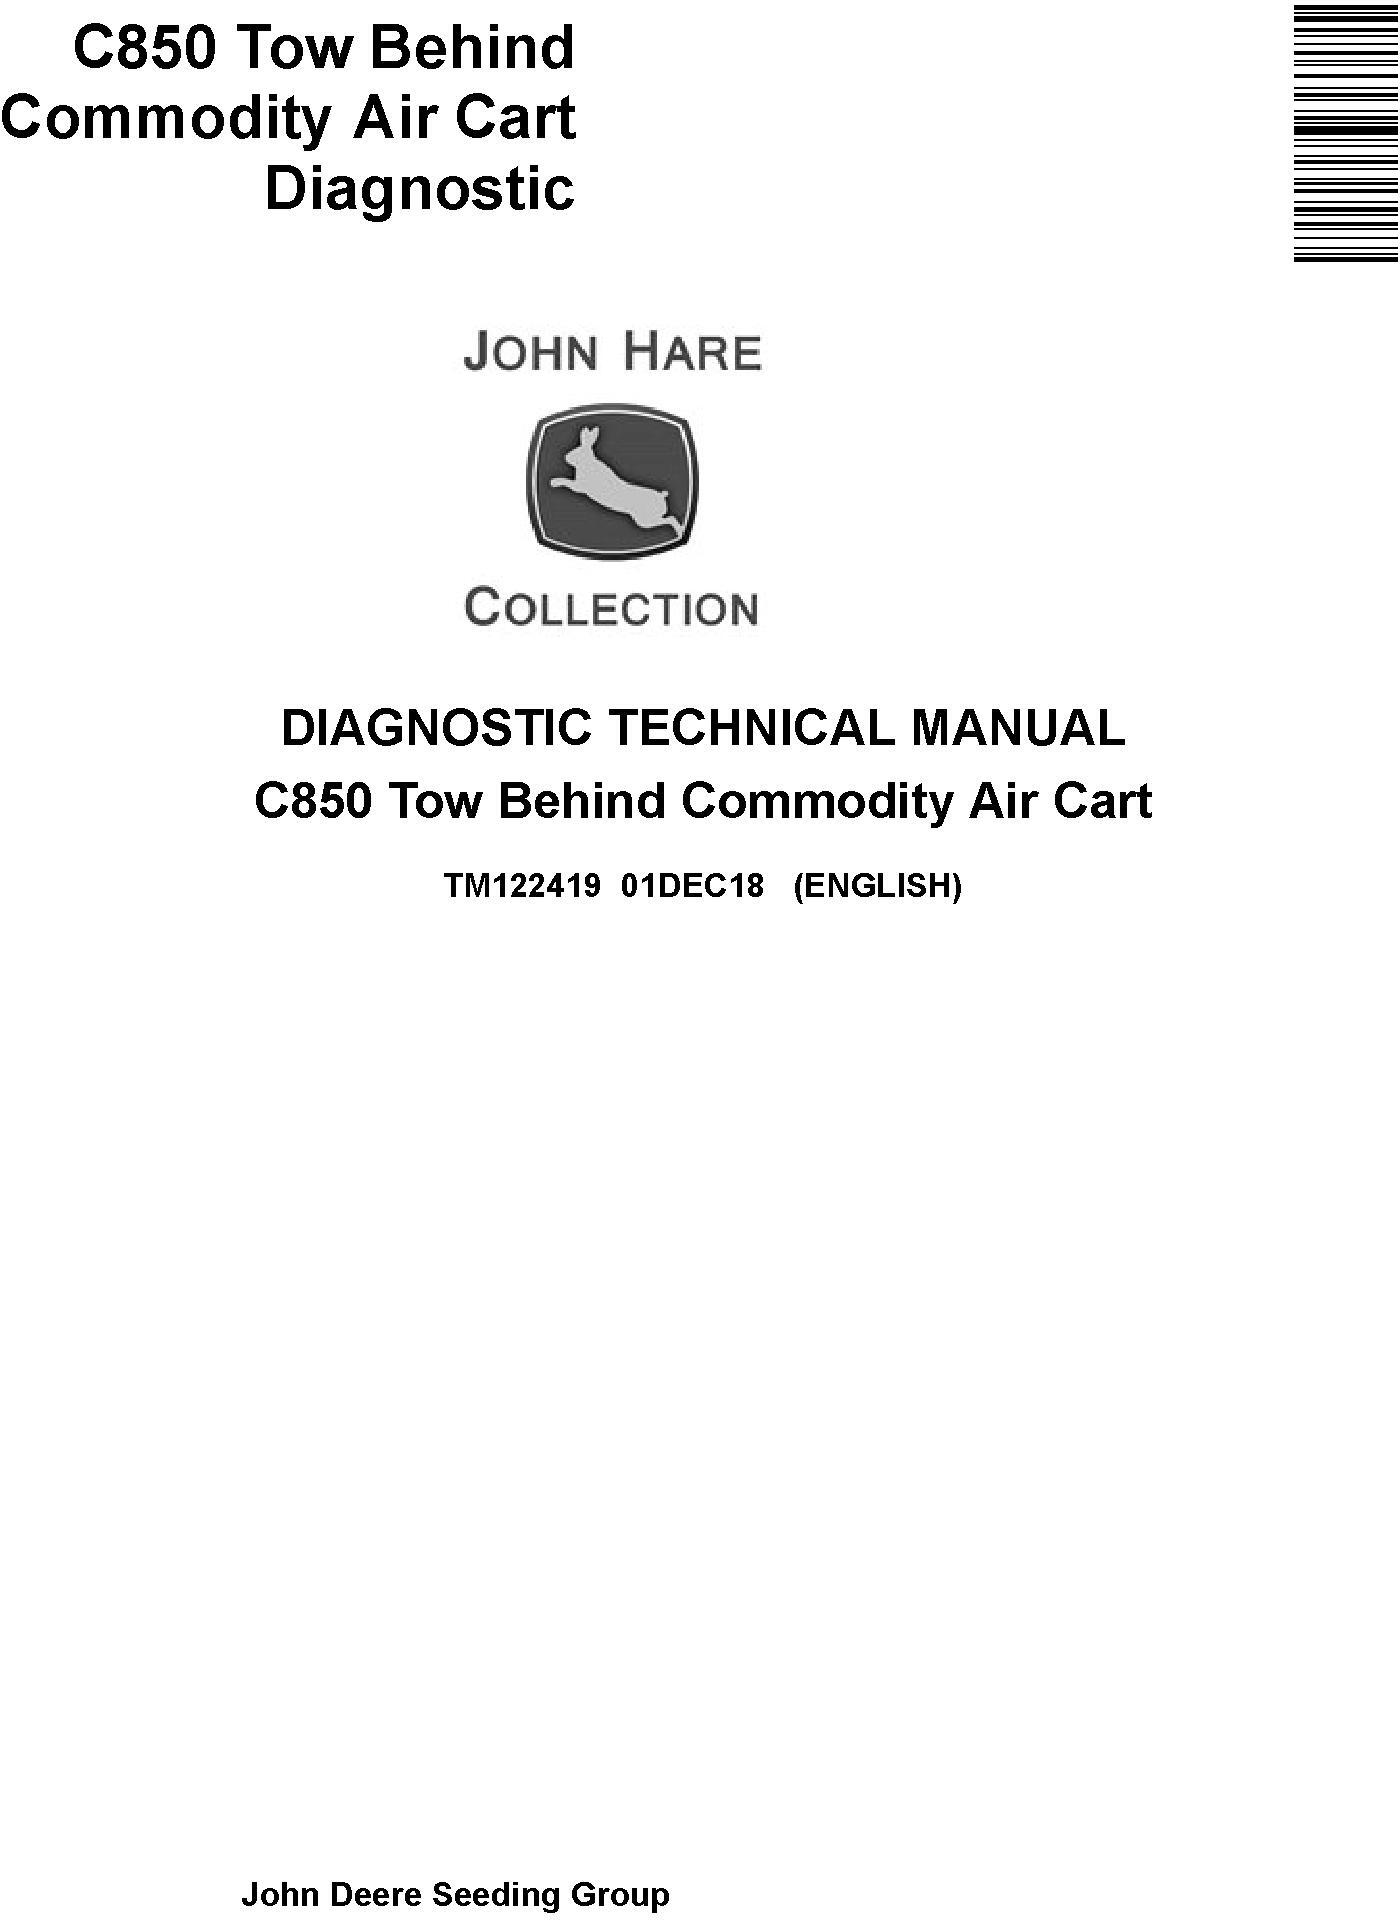 John Deere C850 Tow Behind Commodity Air Cart Diagnostic Technical Manual TM122419